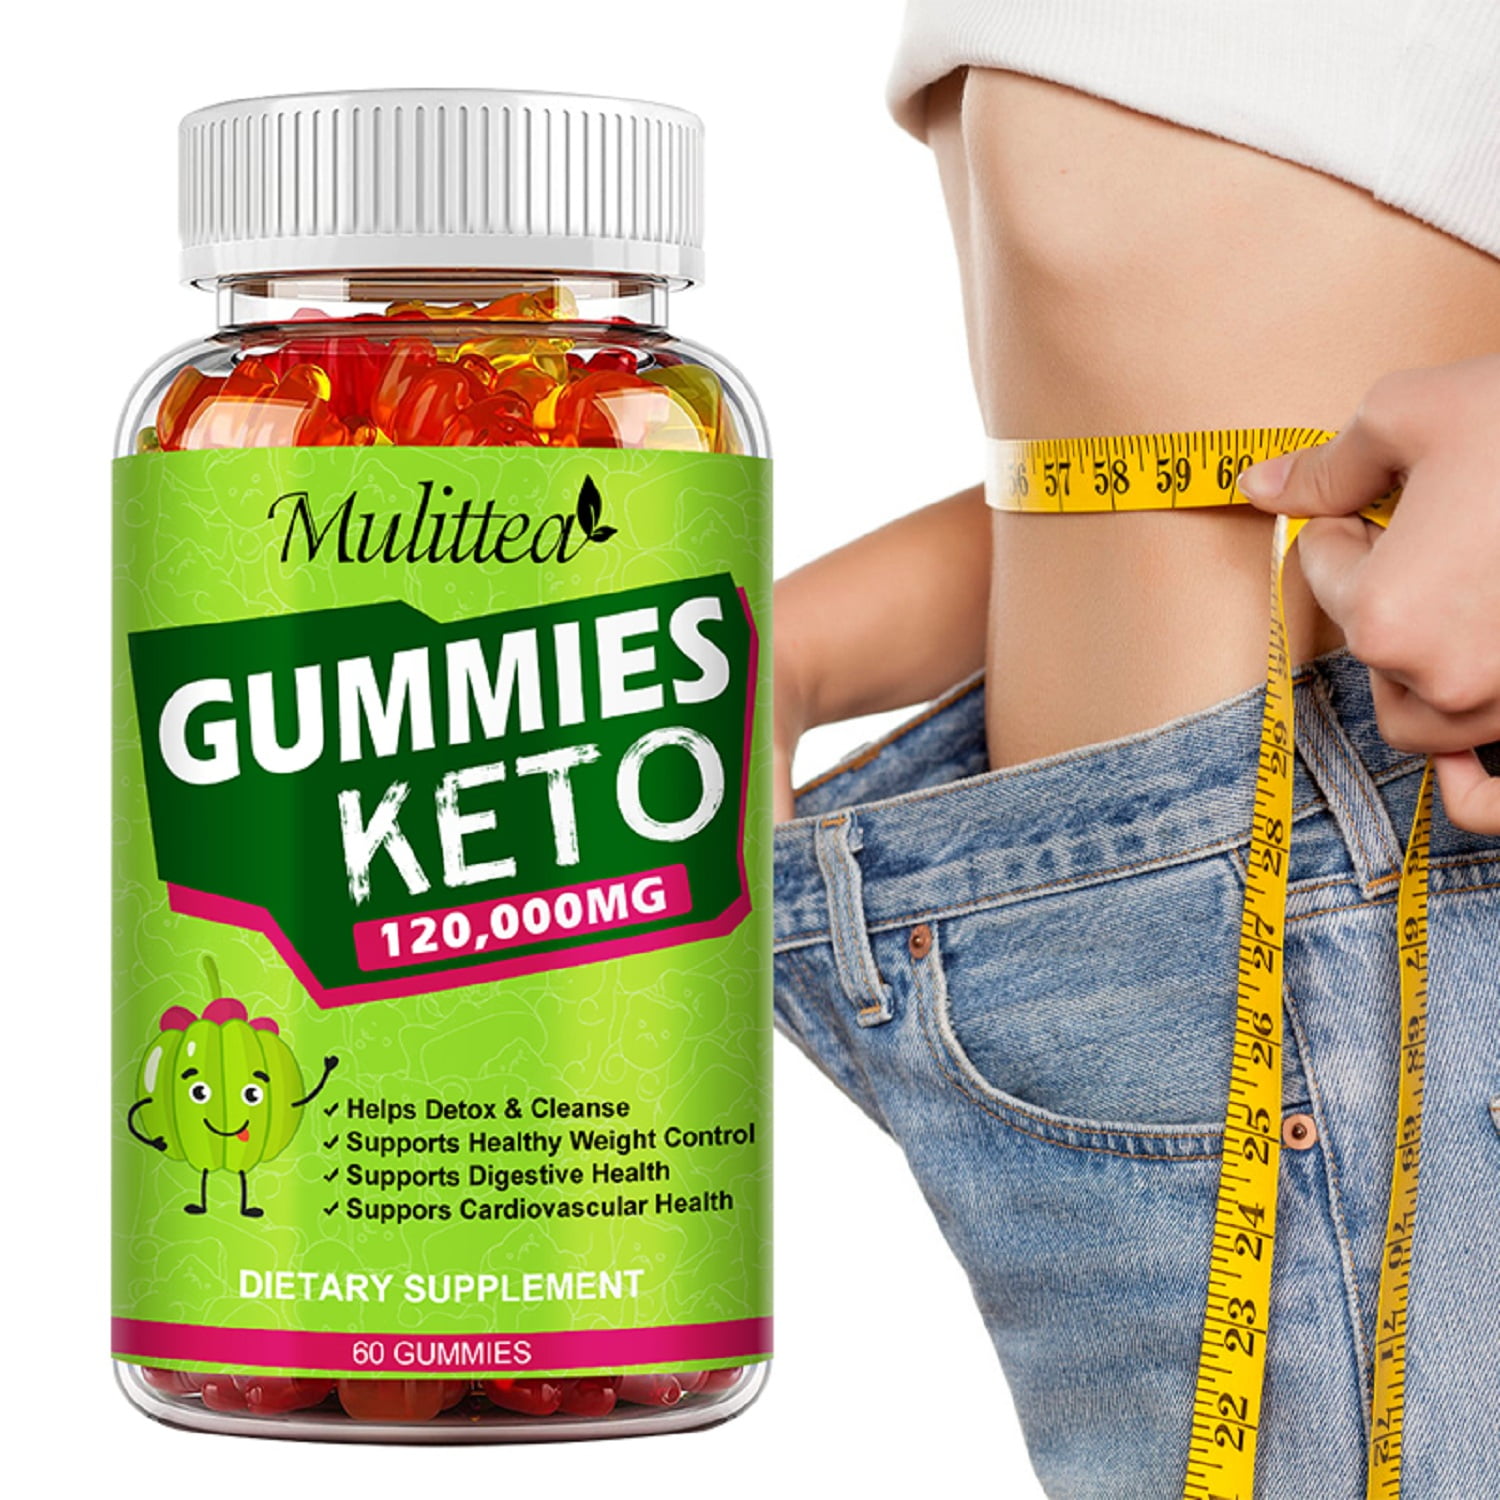 mulittea-keto-gummies-weight-loss-supplement-120-000-mg-fat-burn